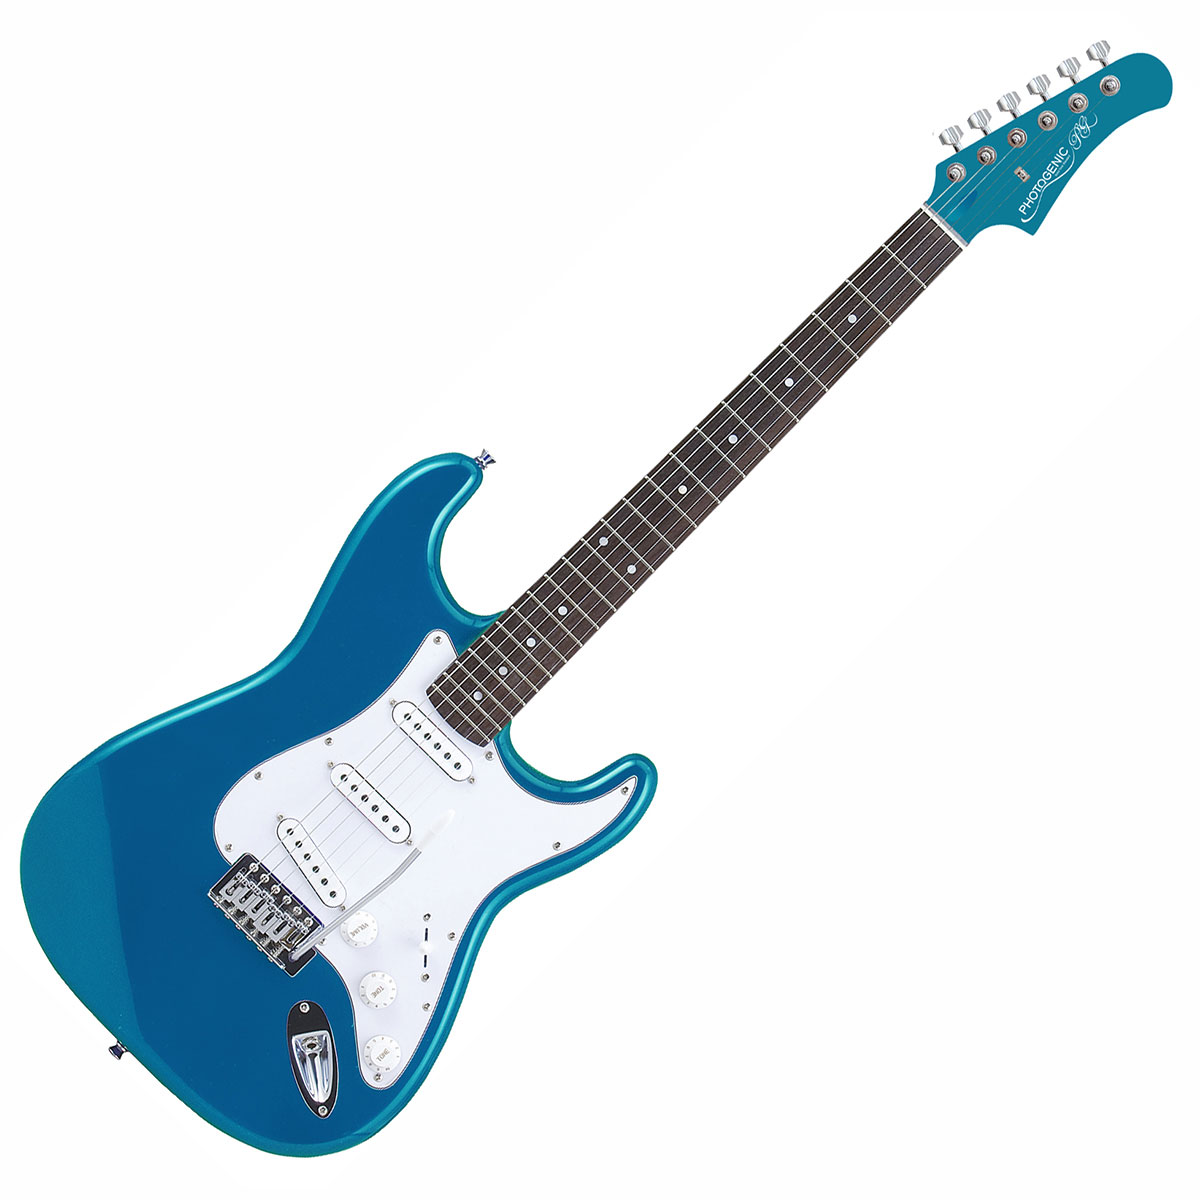 YamahaPhotogenic / Stratocaster ST-180 ギター